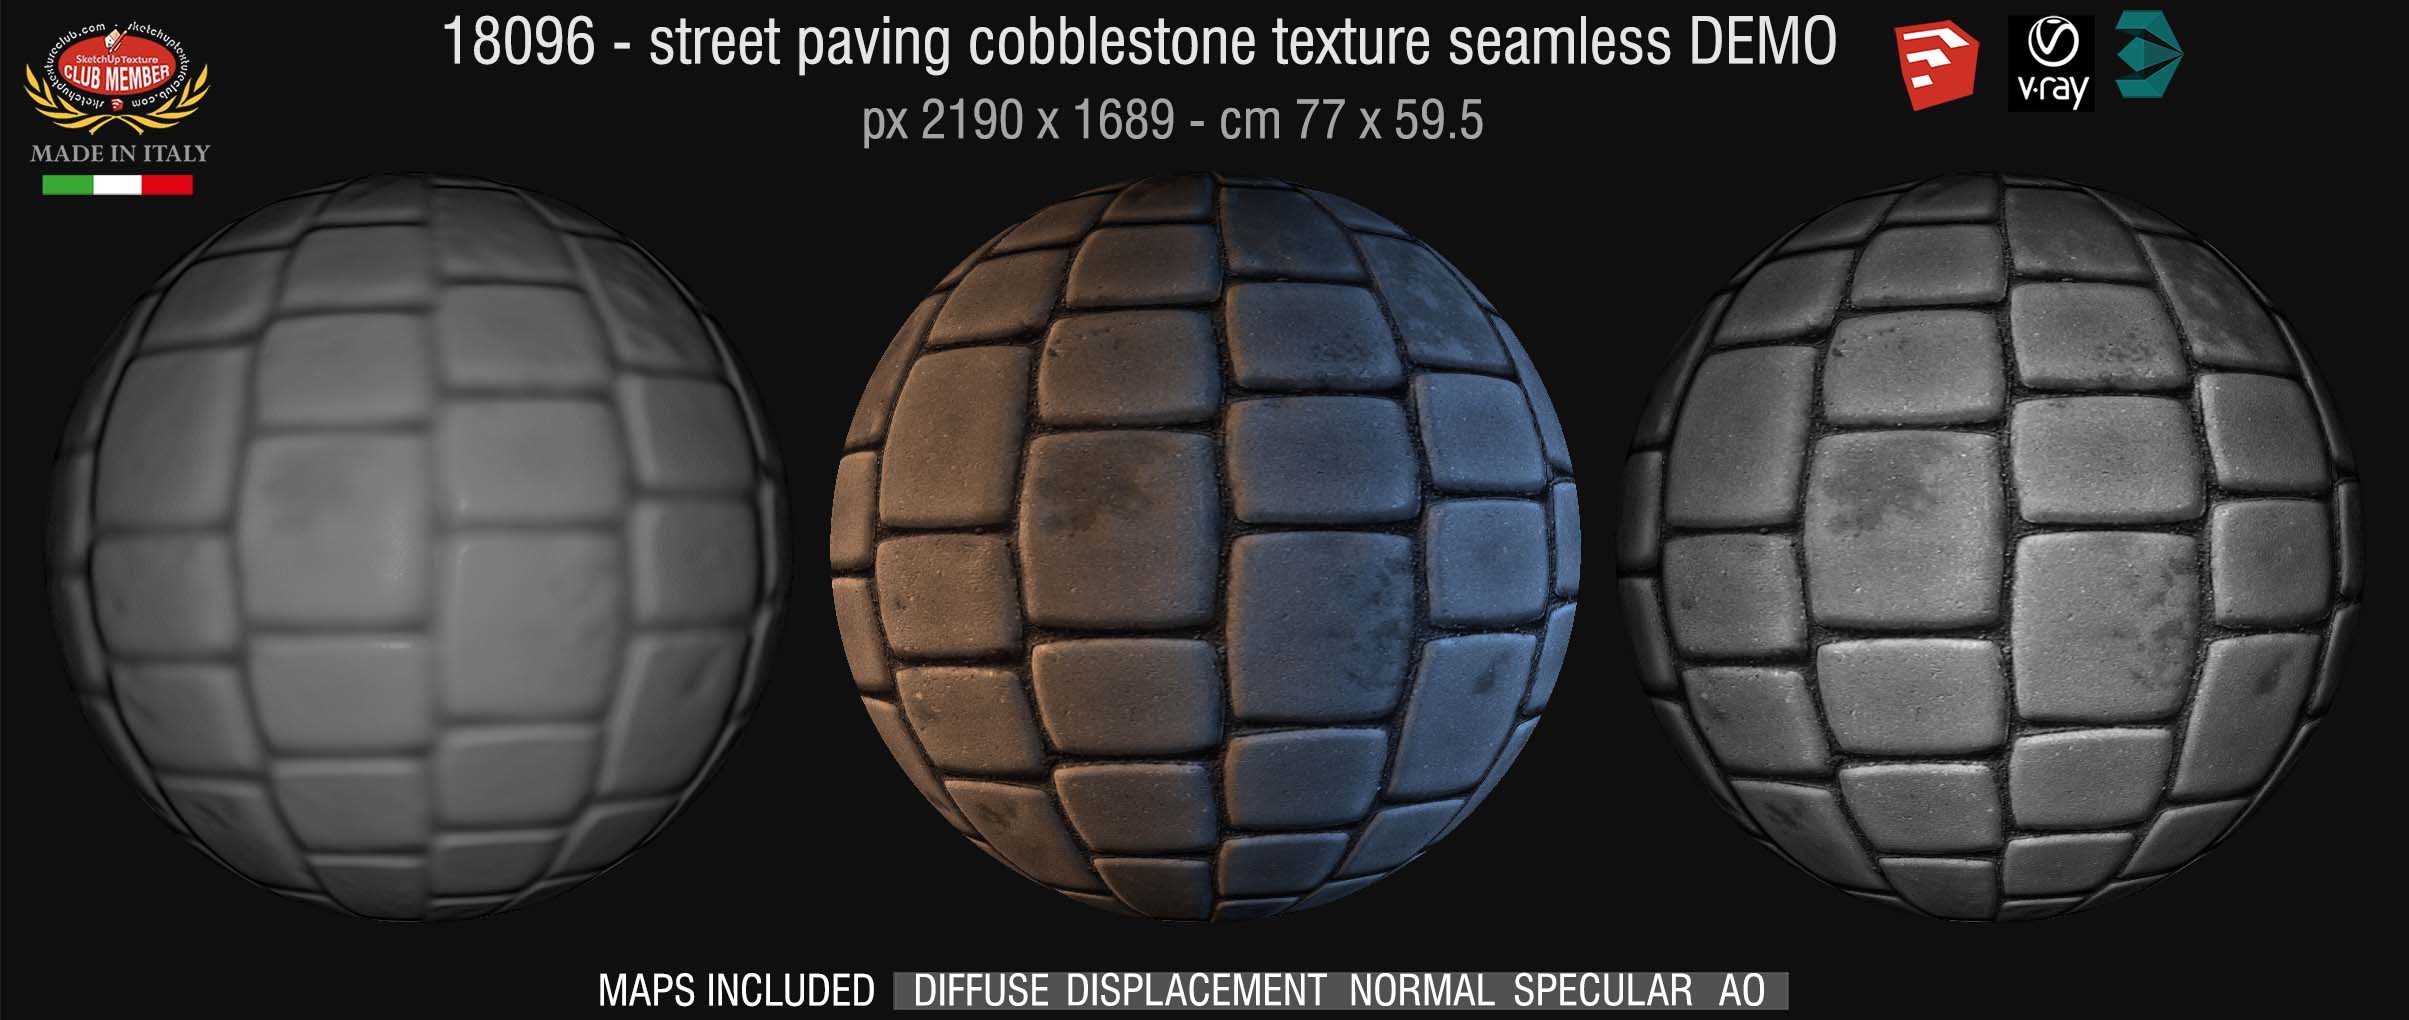 18096 HR Street paving cobblestone texture seamless + maps DEMO